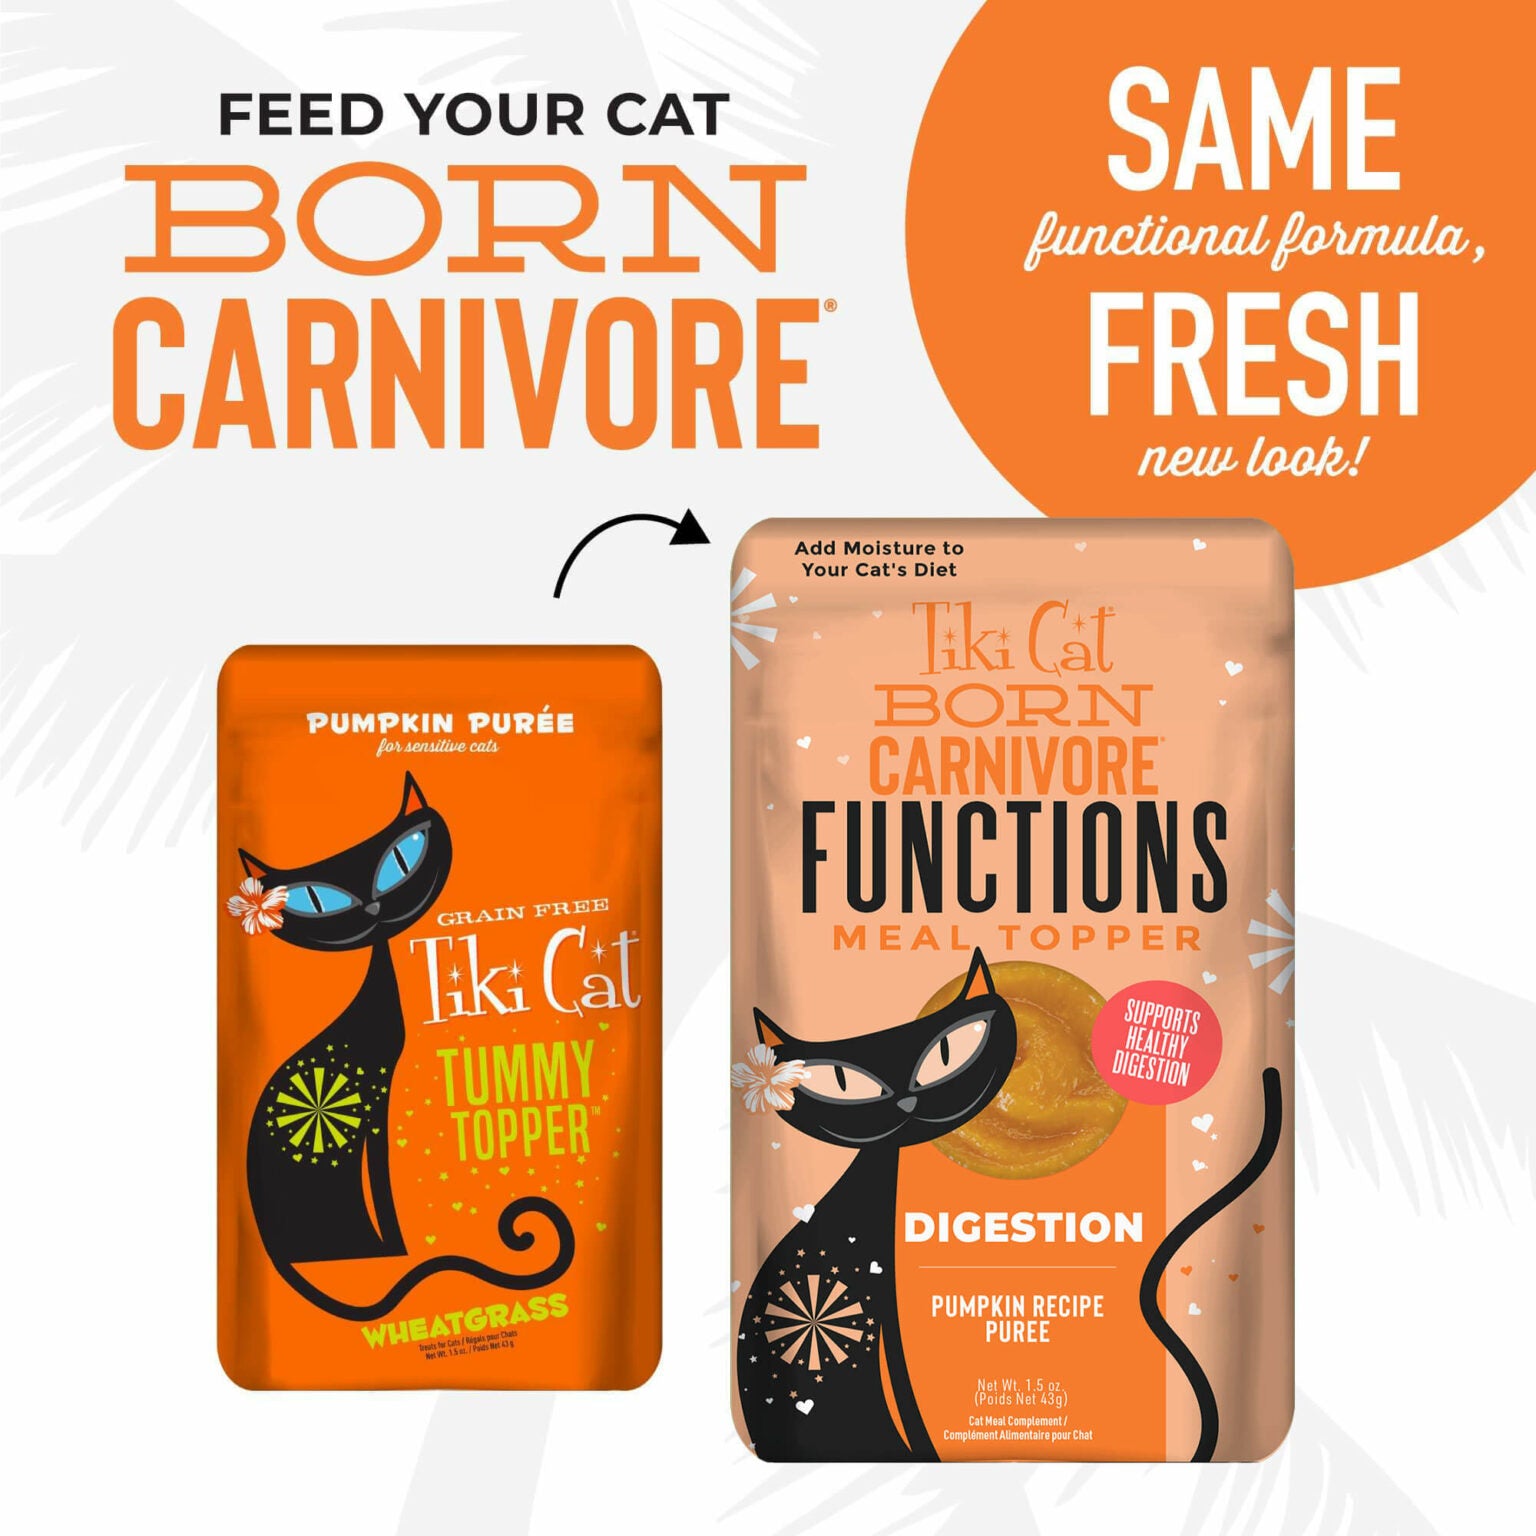 Tiki Cat - Born Carnivore Functions - Digestion Pumpkin Recipe Puree Tummy Topper (For Cats)